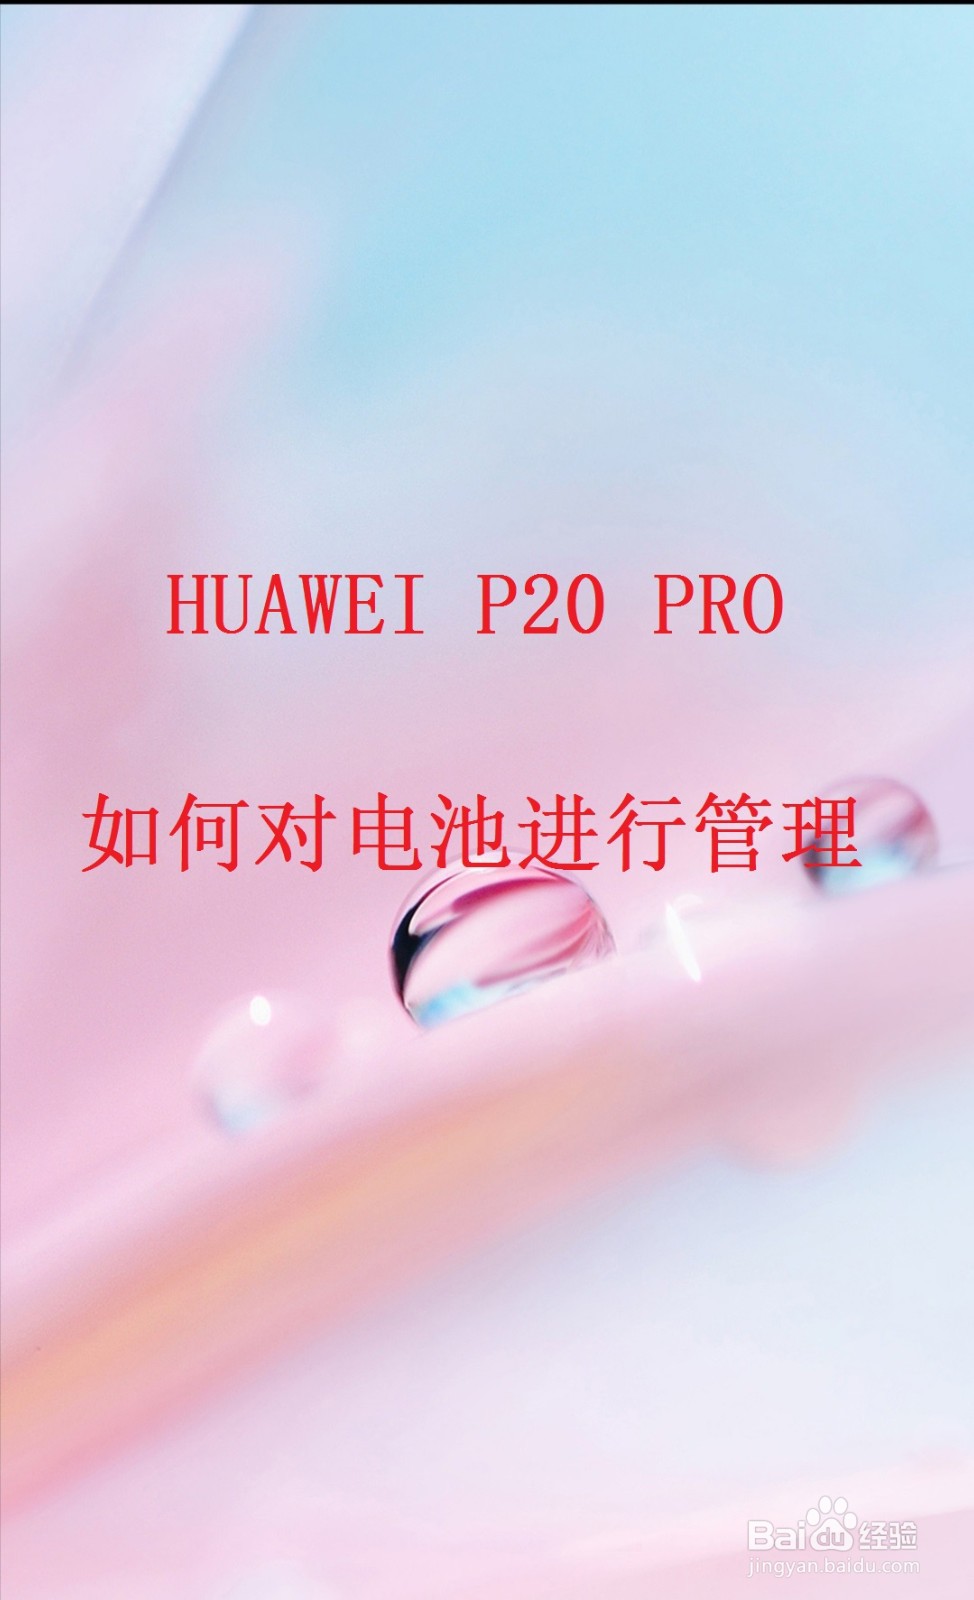 <b>HUAWEI P20 PRO如何对电池进行管理</b>